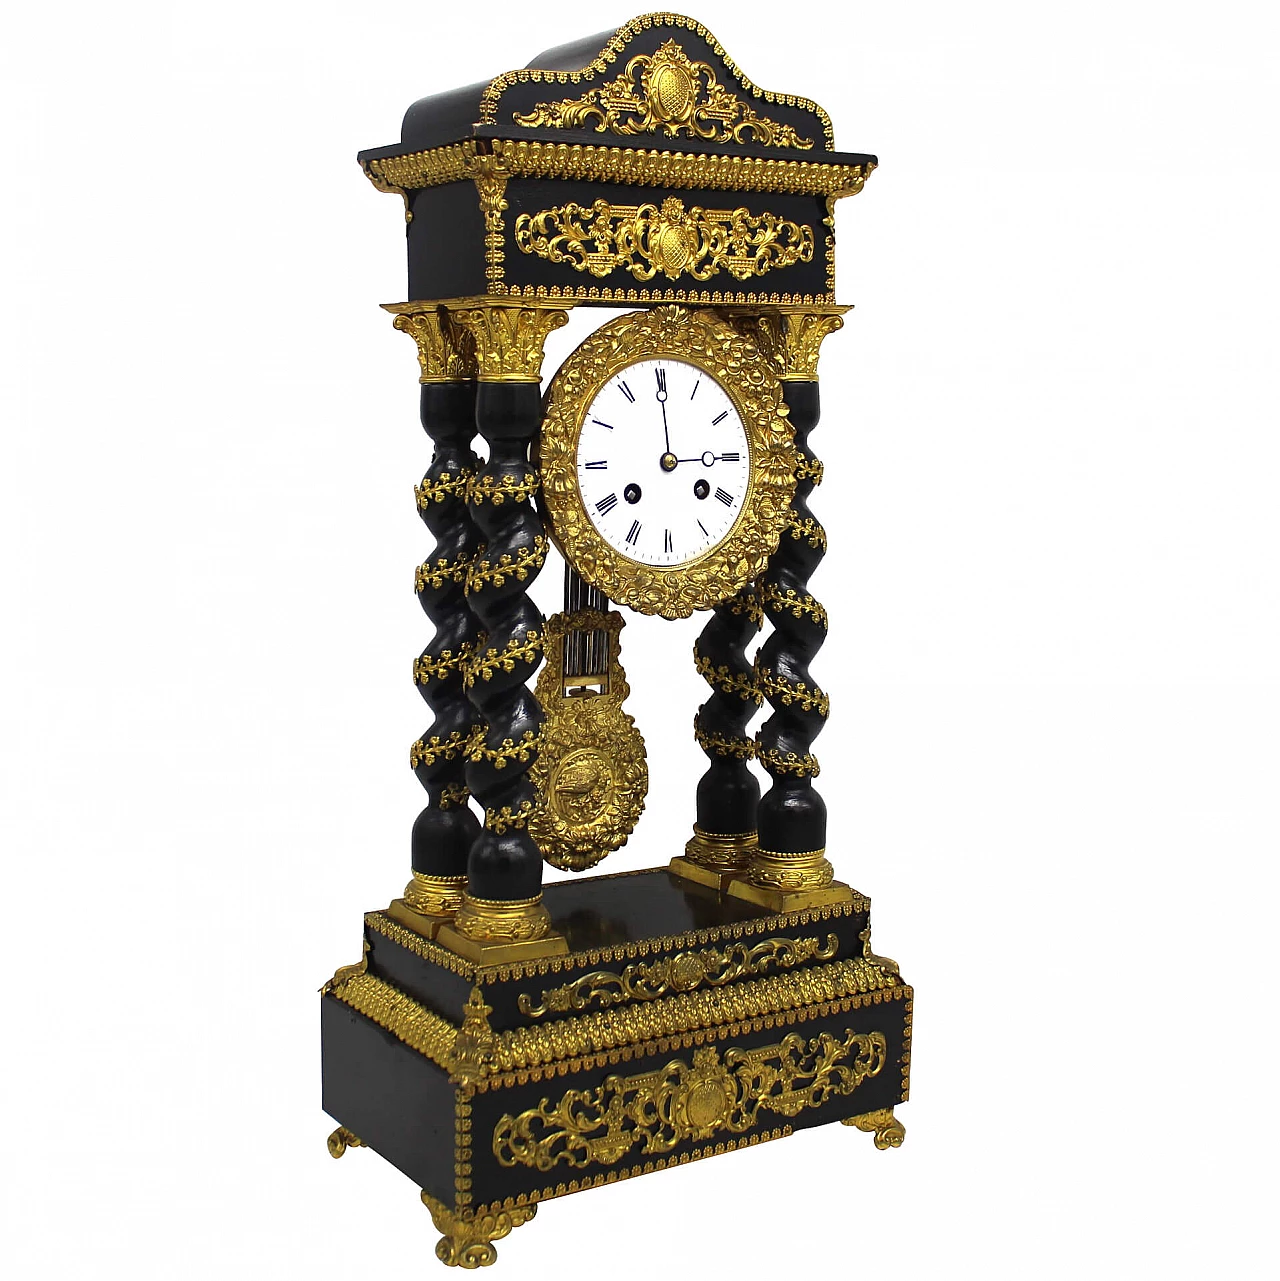 Napoleon III pendulum clock in ebonized wood and gilded bronzes, 19th century. 1338629